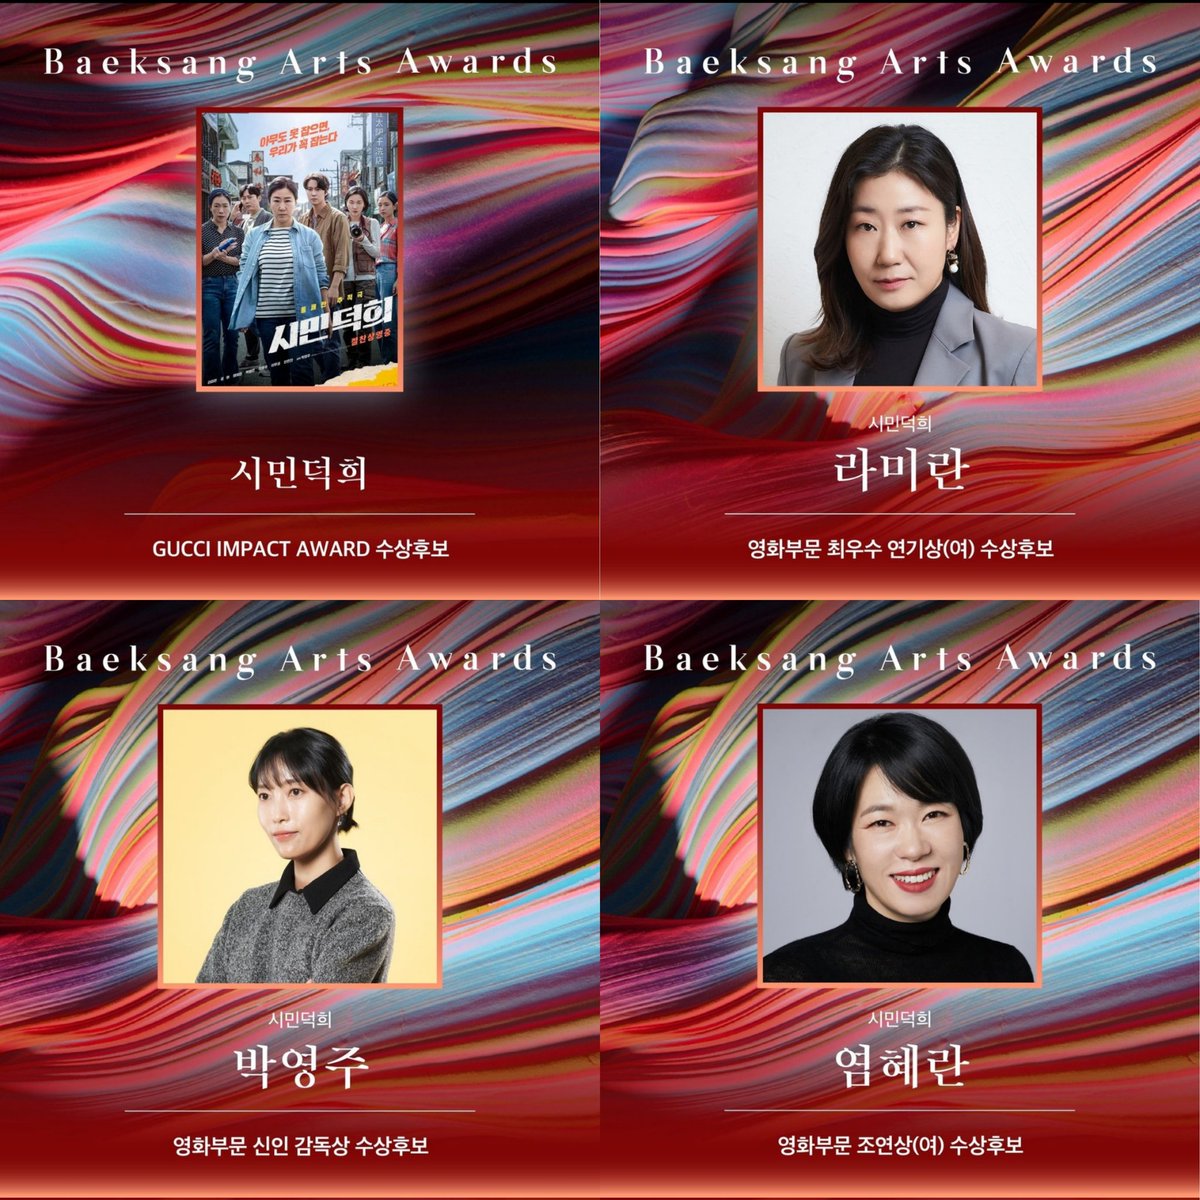 #CitizenOfAKind in 60th Baeksang Arts Awards Nominations 🤎

☆ Gucci Impact Award: #시민덕희
☆ Best Actress: #RaMiran 
☆ Best Supporting Actress: #YeomHyeran 
☆ Best New Director: Park Youngju

#60thBaeksangArtsAwards